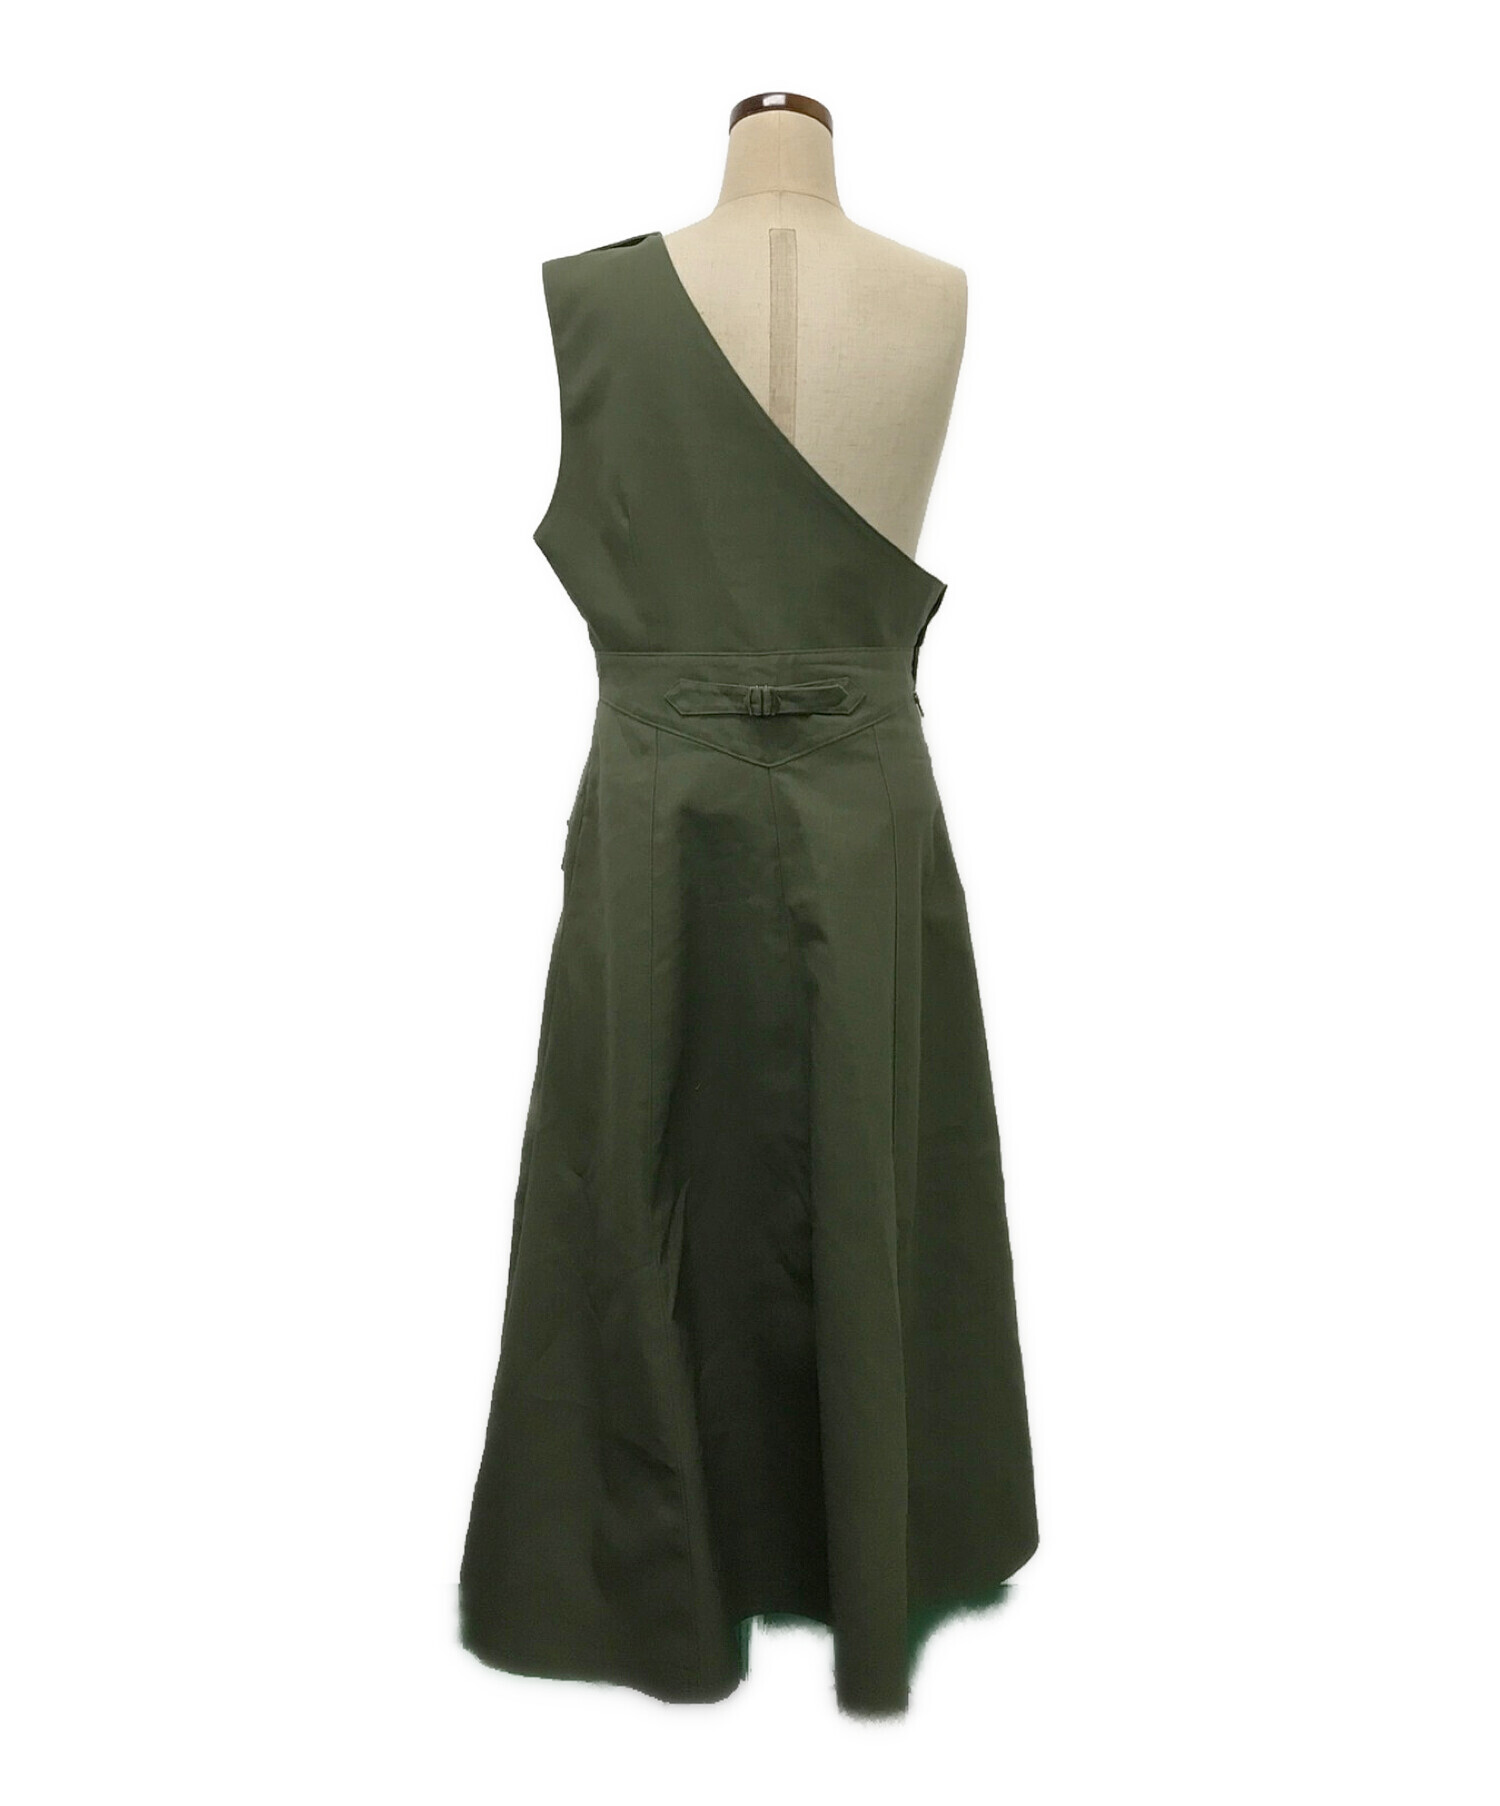 Re:poris (レポリス) military sash dress オリーブ サイズ:-